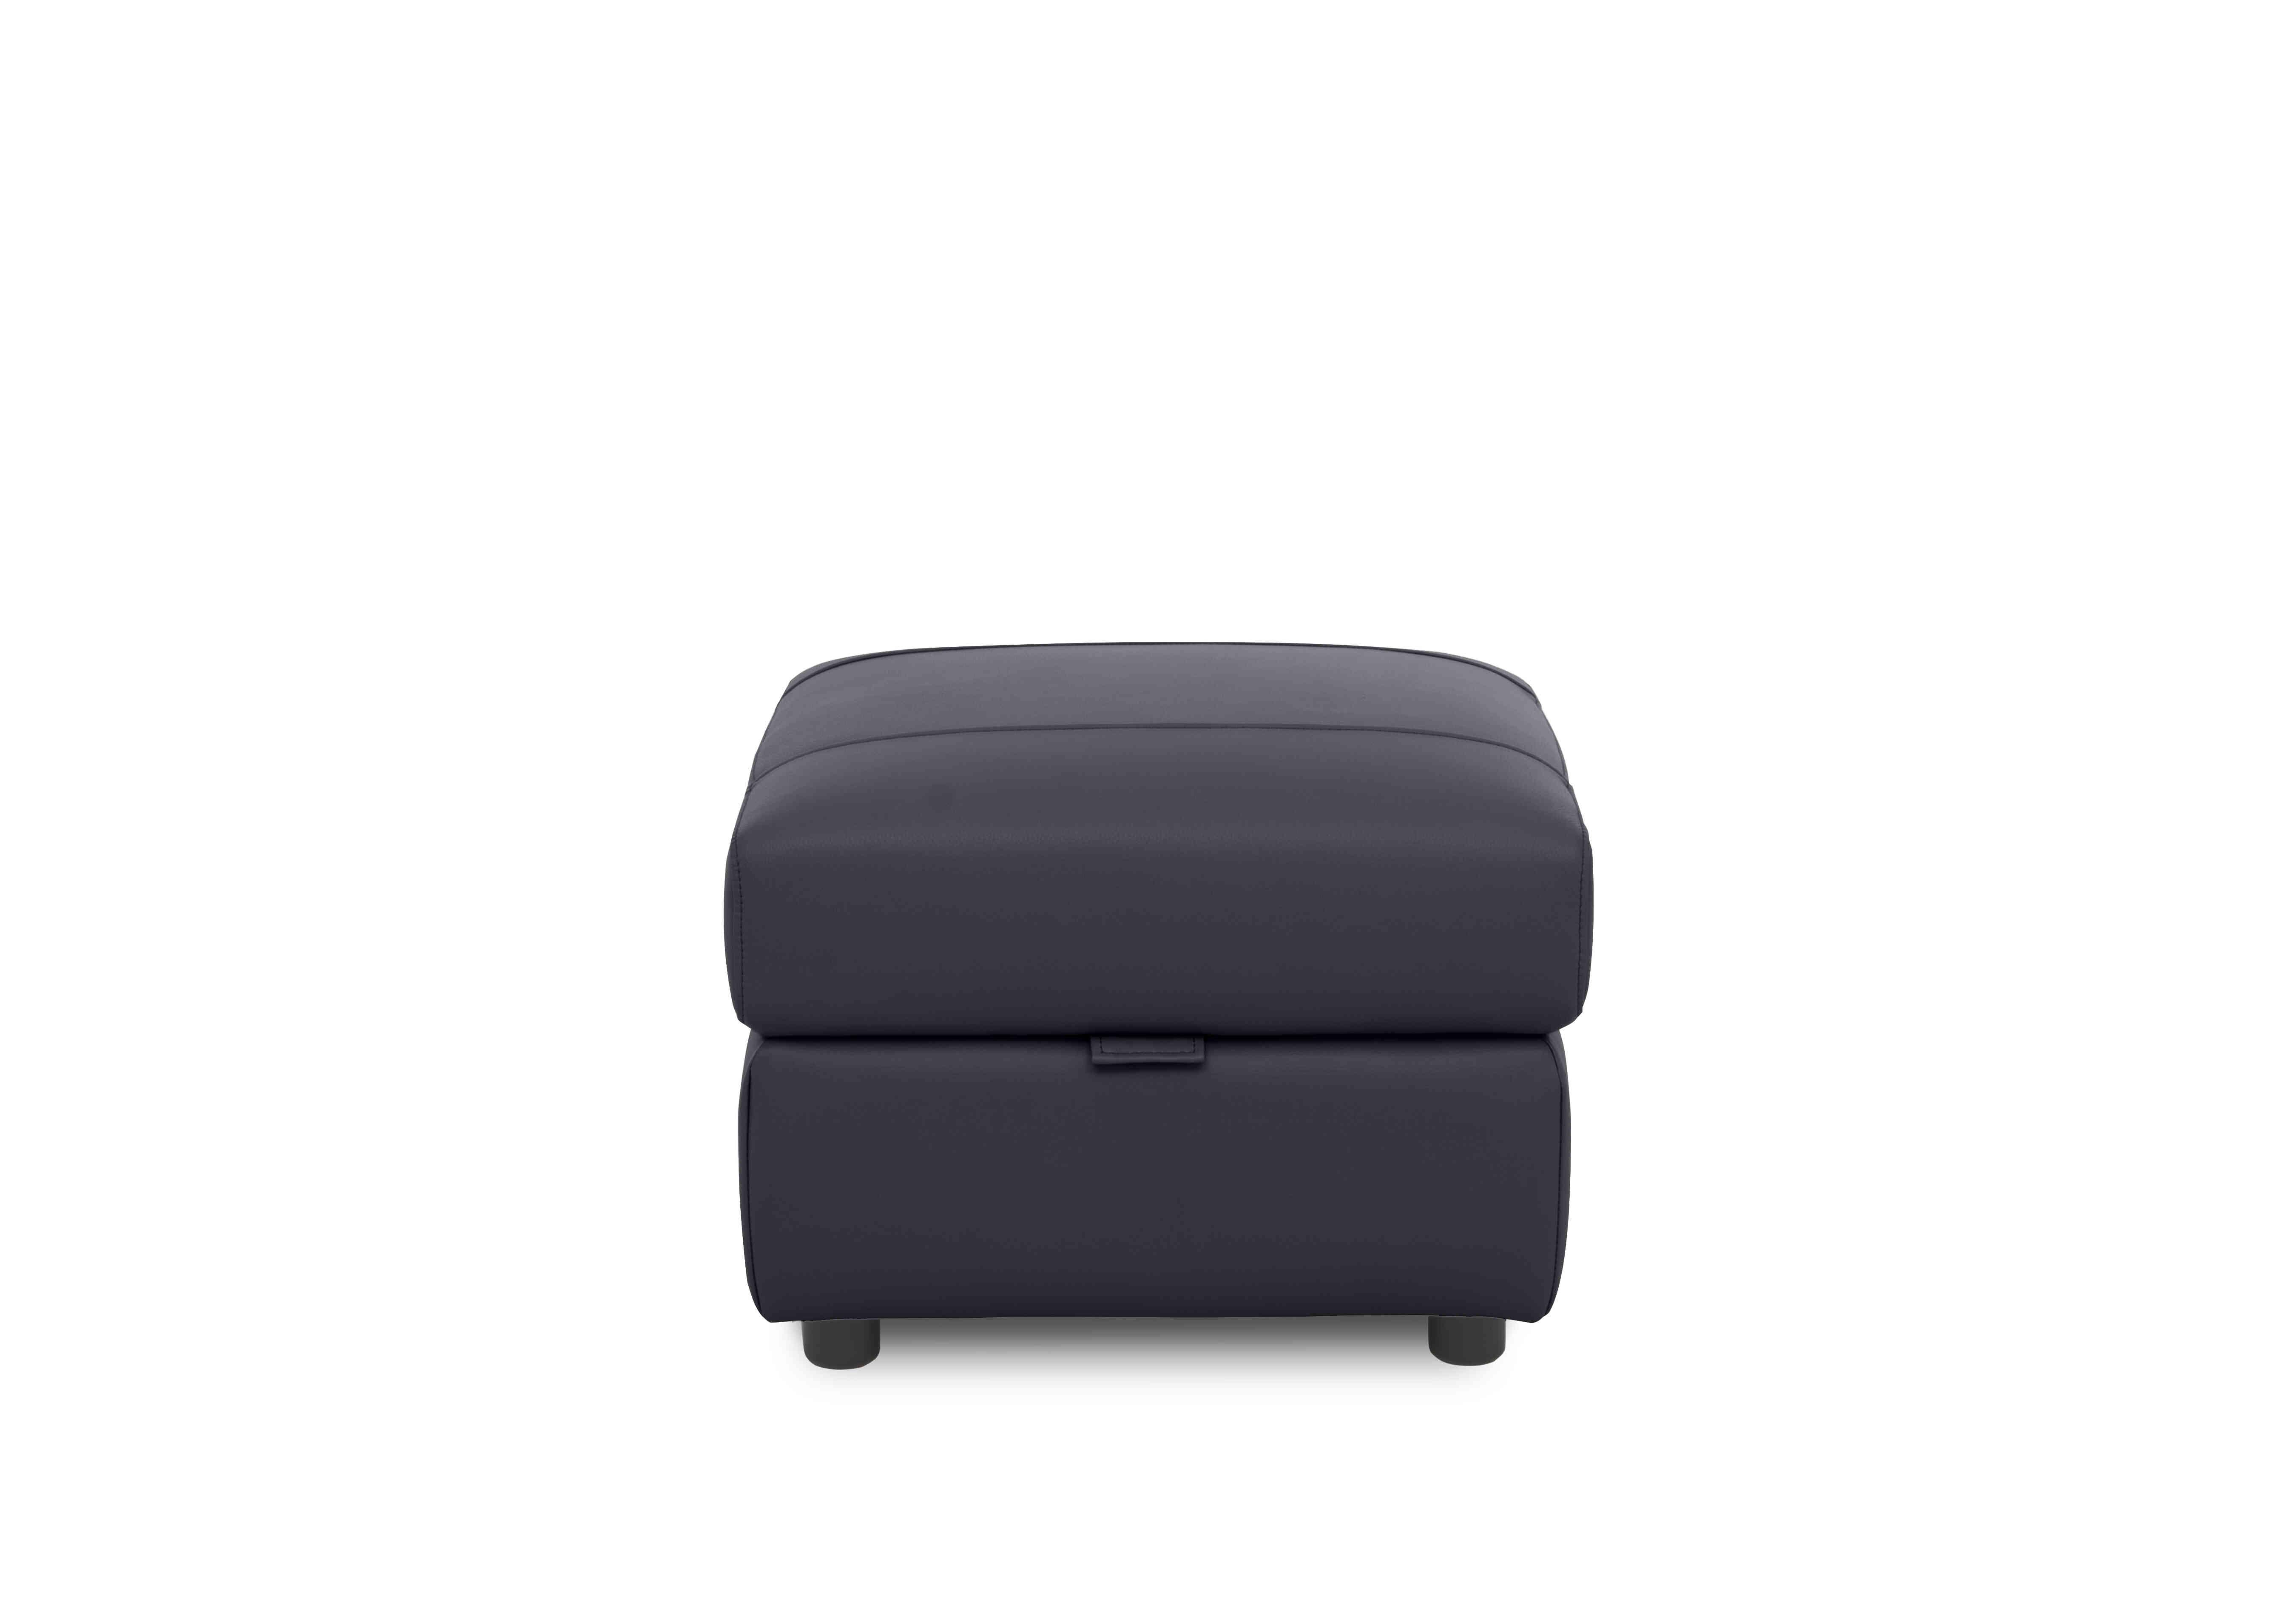 Sloane Leather Storage Footstool in Cat-60/18 Lavender Grey on Furniture Village